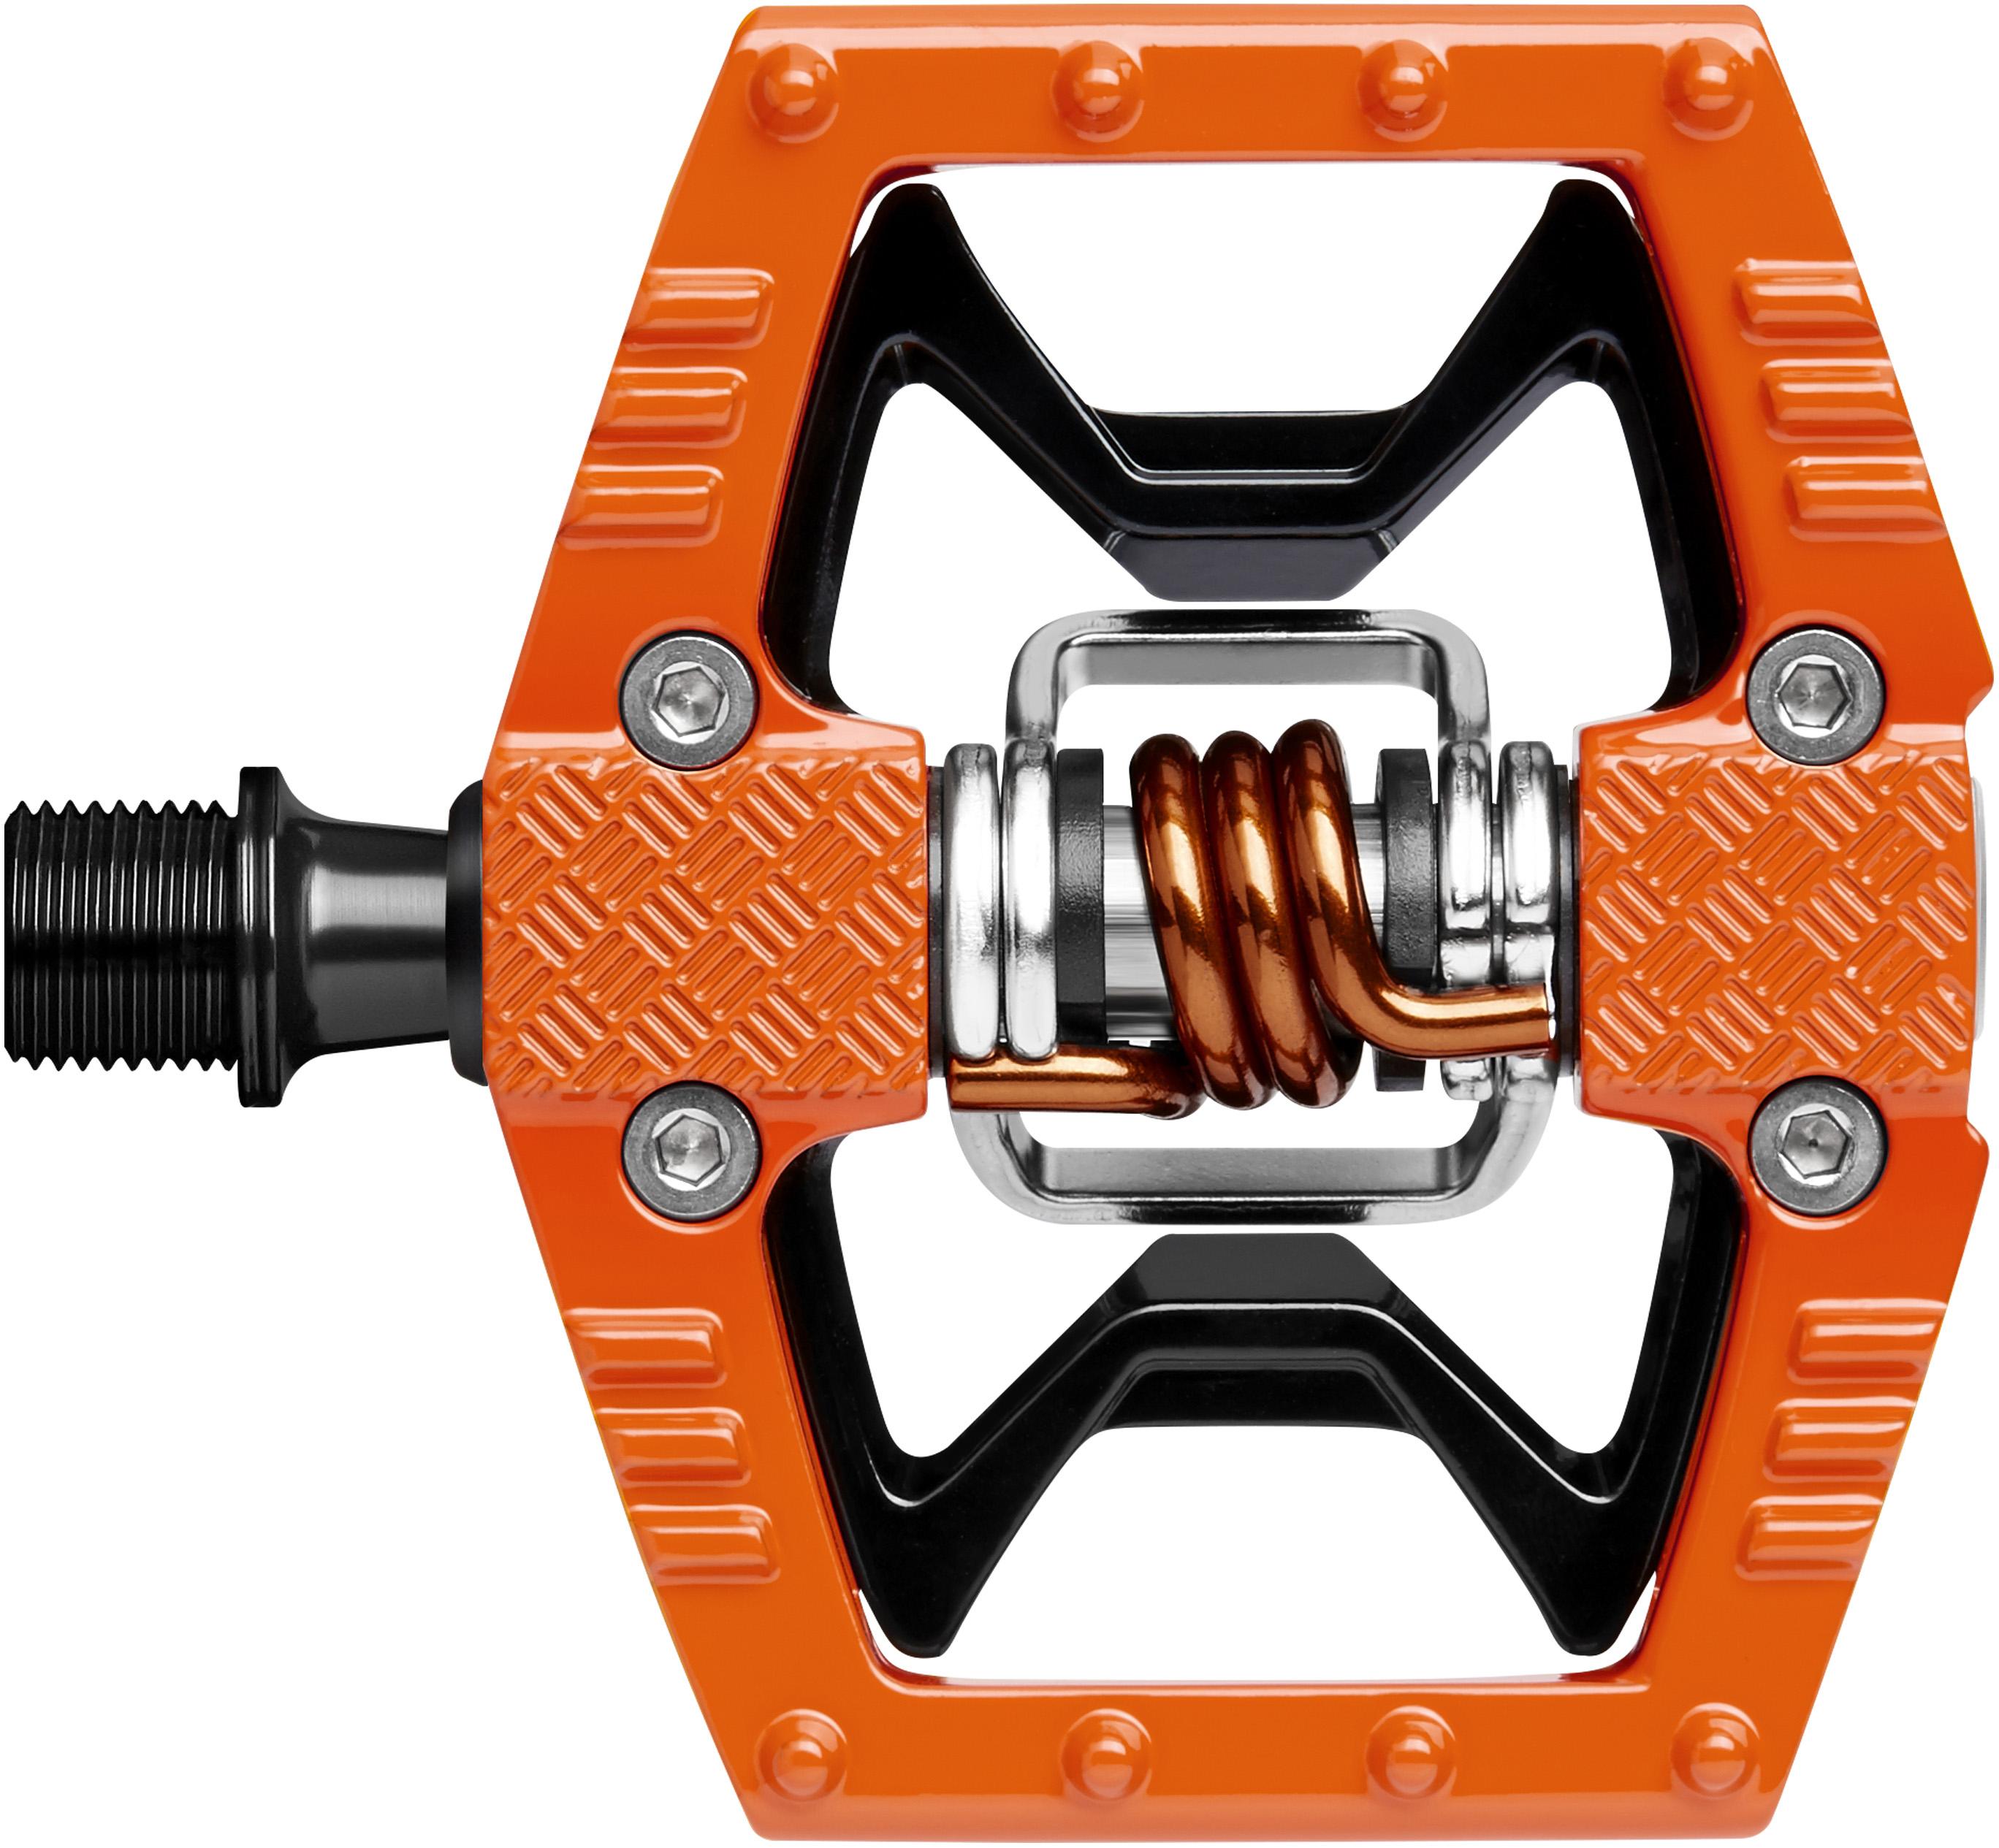 Crankbrothers Doubleshot Pedals - Red/orange